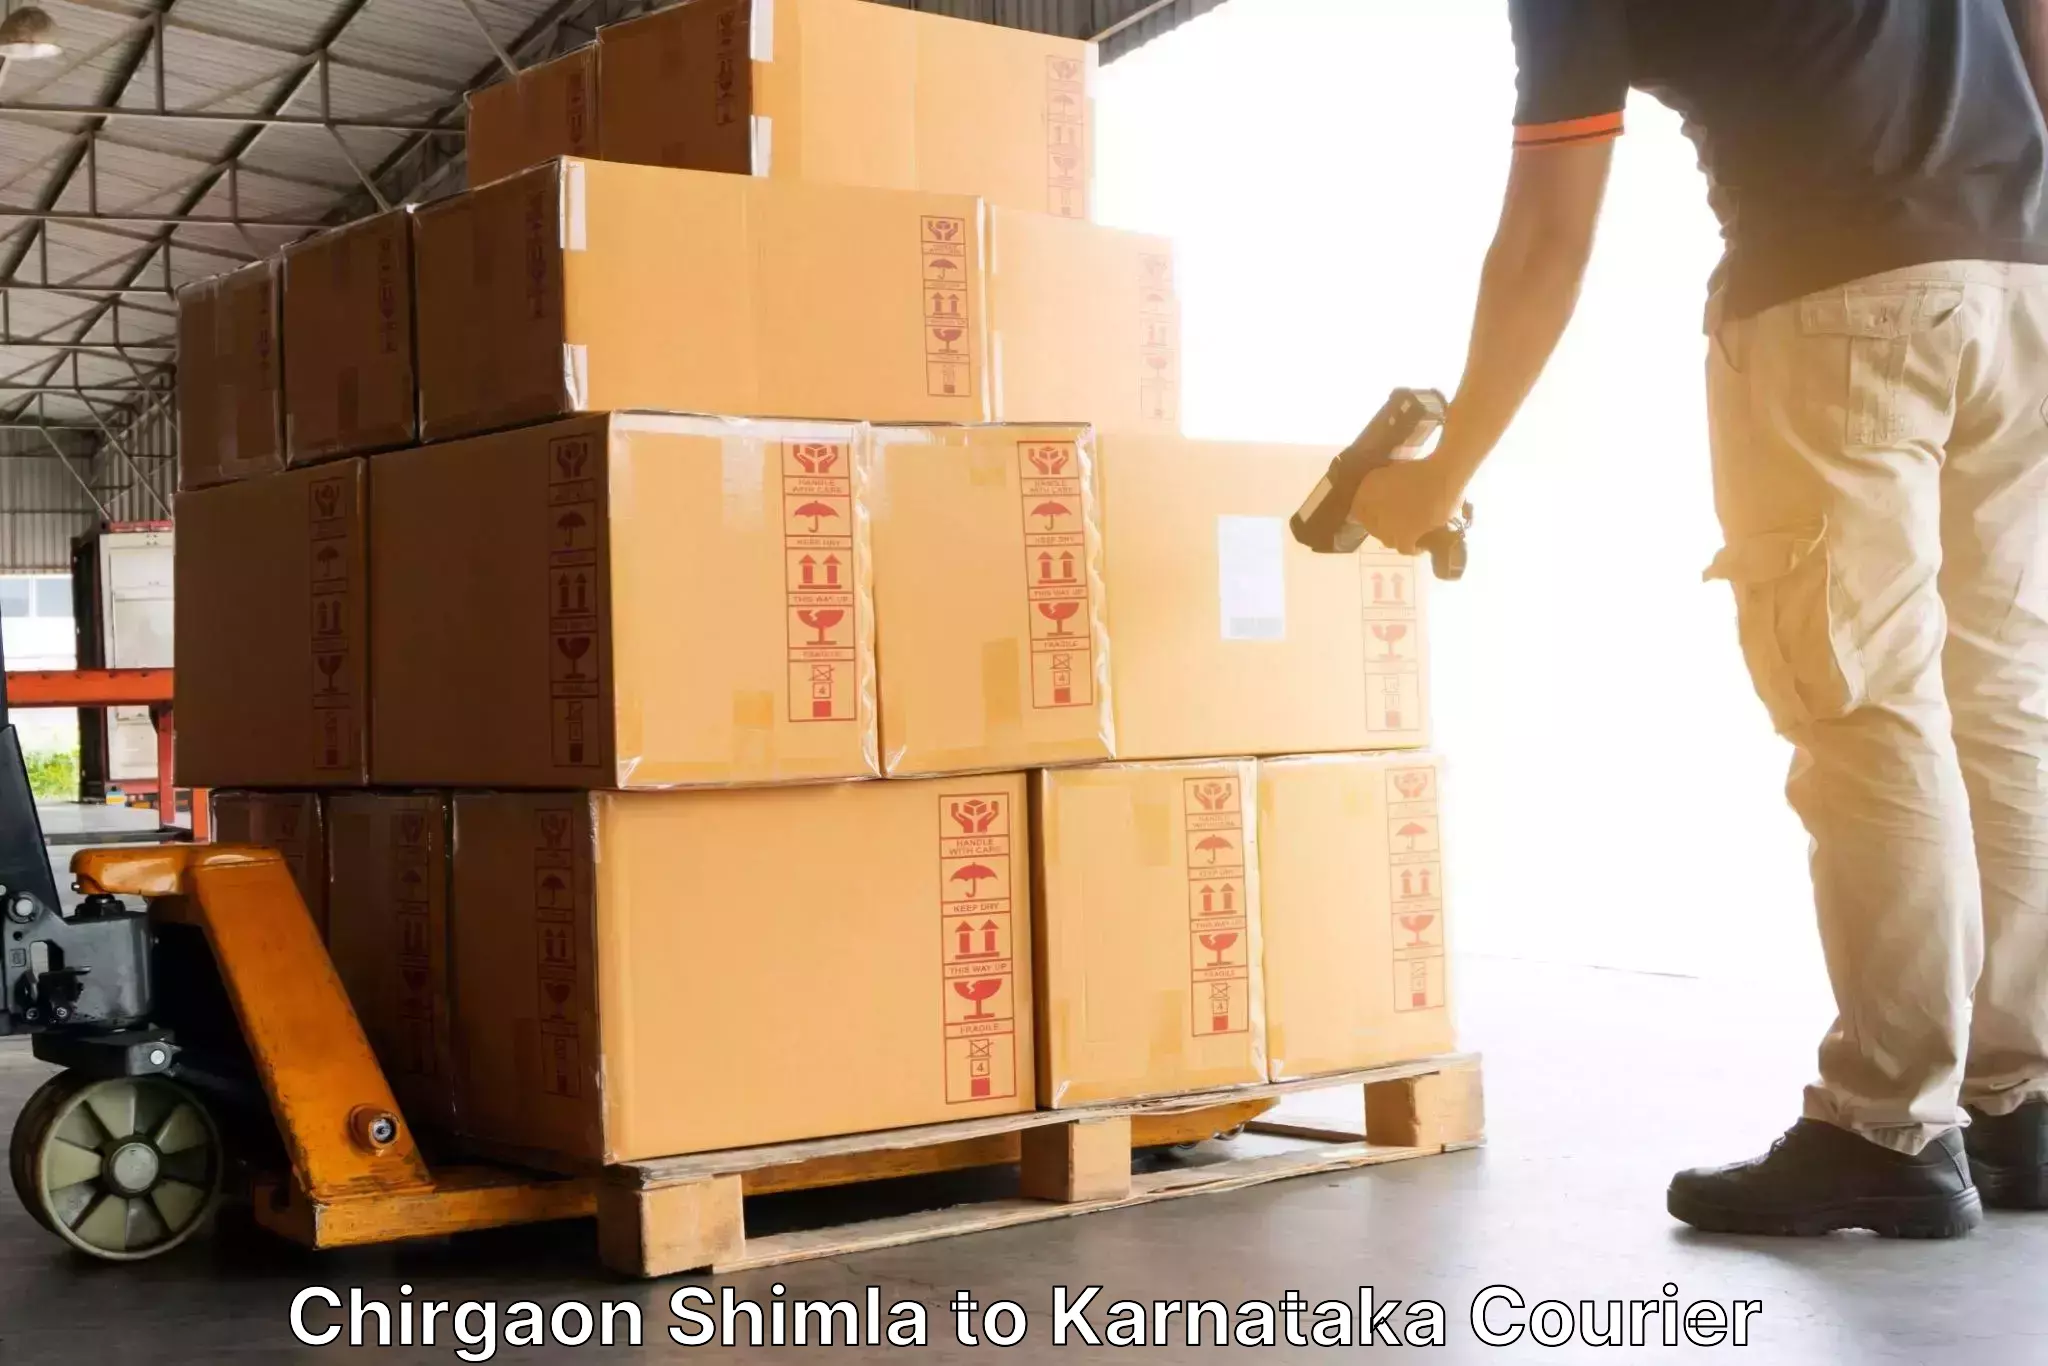 Full-service courier options Chirgaon Shimla to Hoovina Hadagali